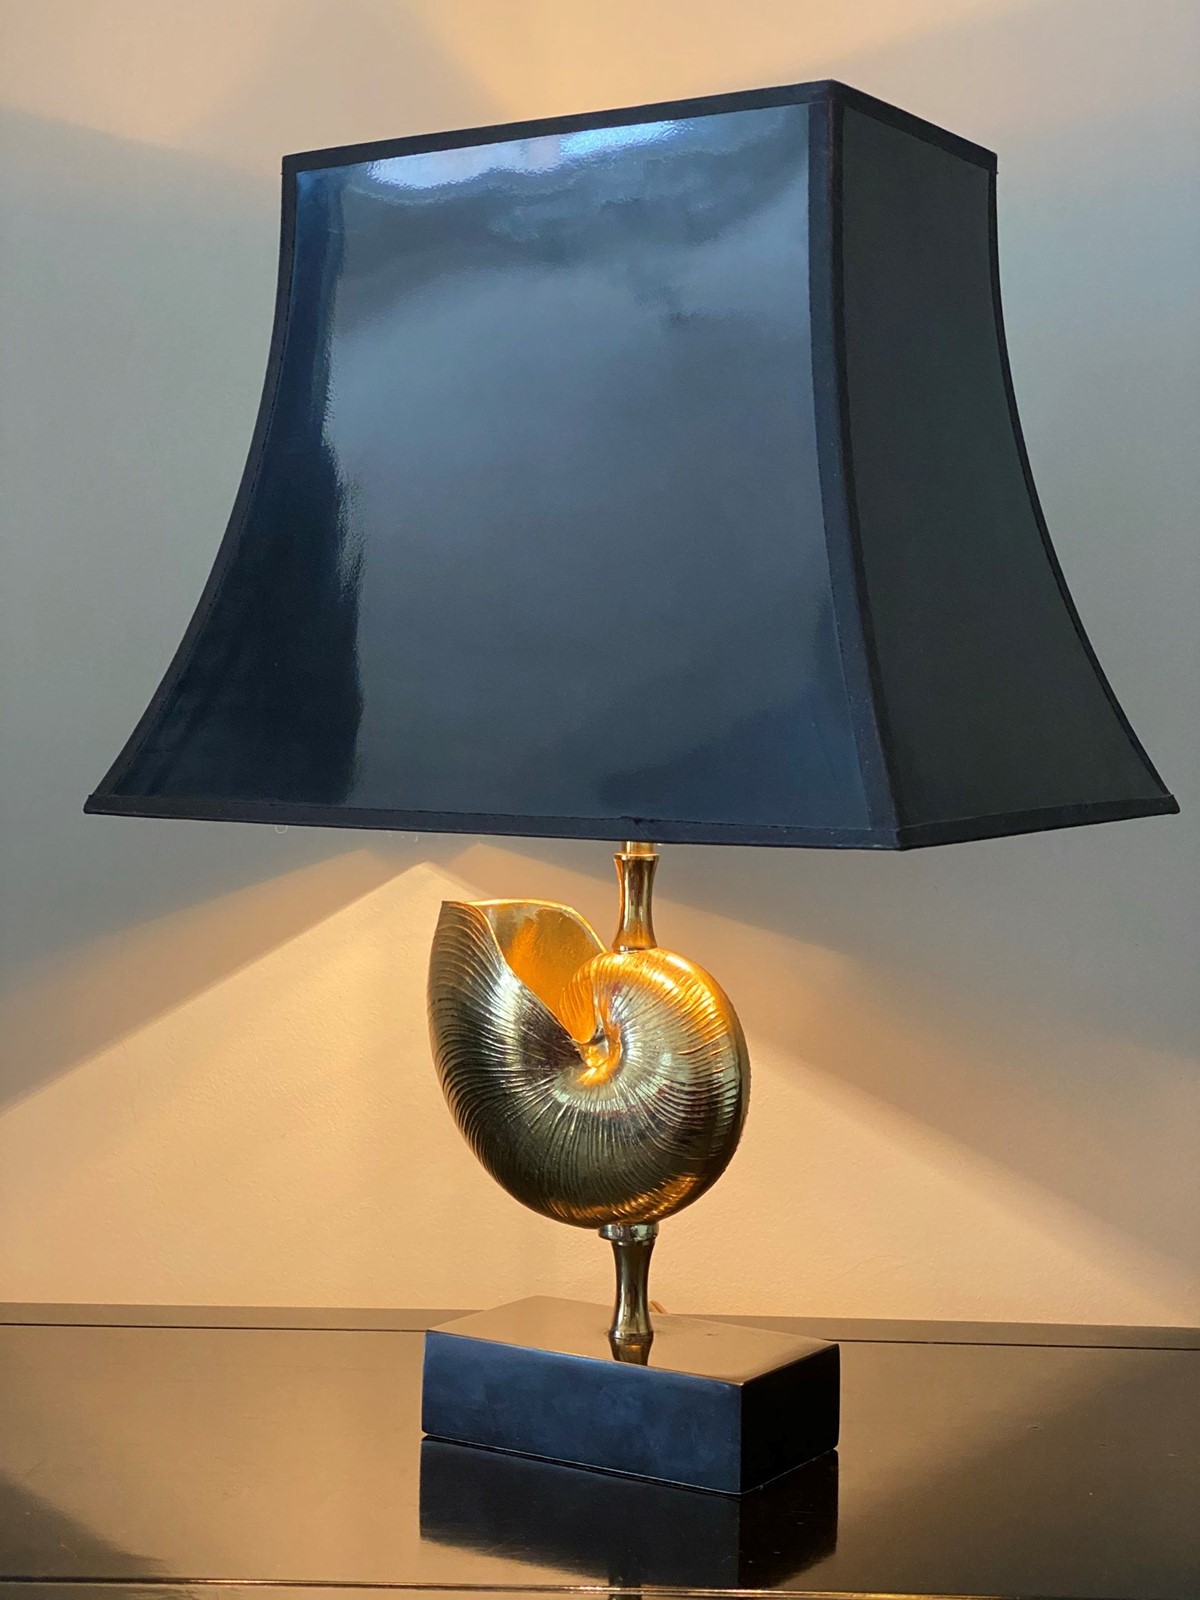 Nautilus Shell Sculpture Table Lamp By Deknudt - Decorative Collective